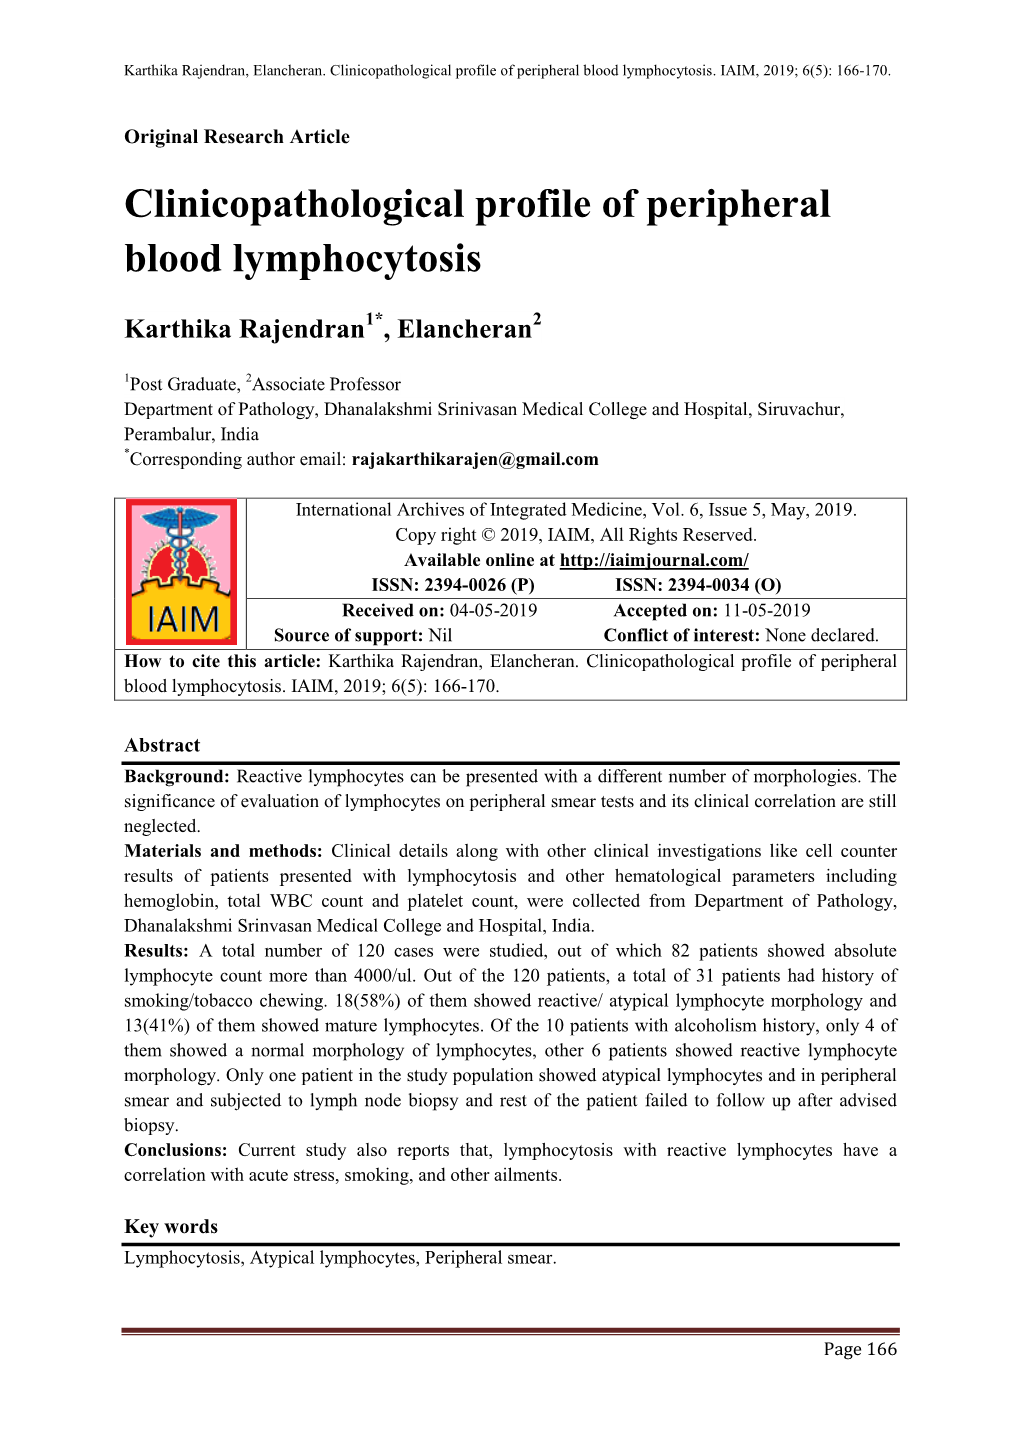 Clinicopathological Profile of Peripheral Blood Lymphocytosis